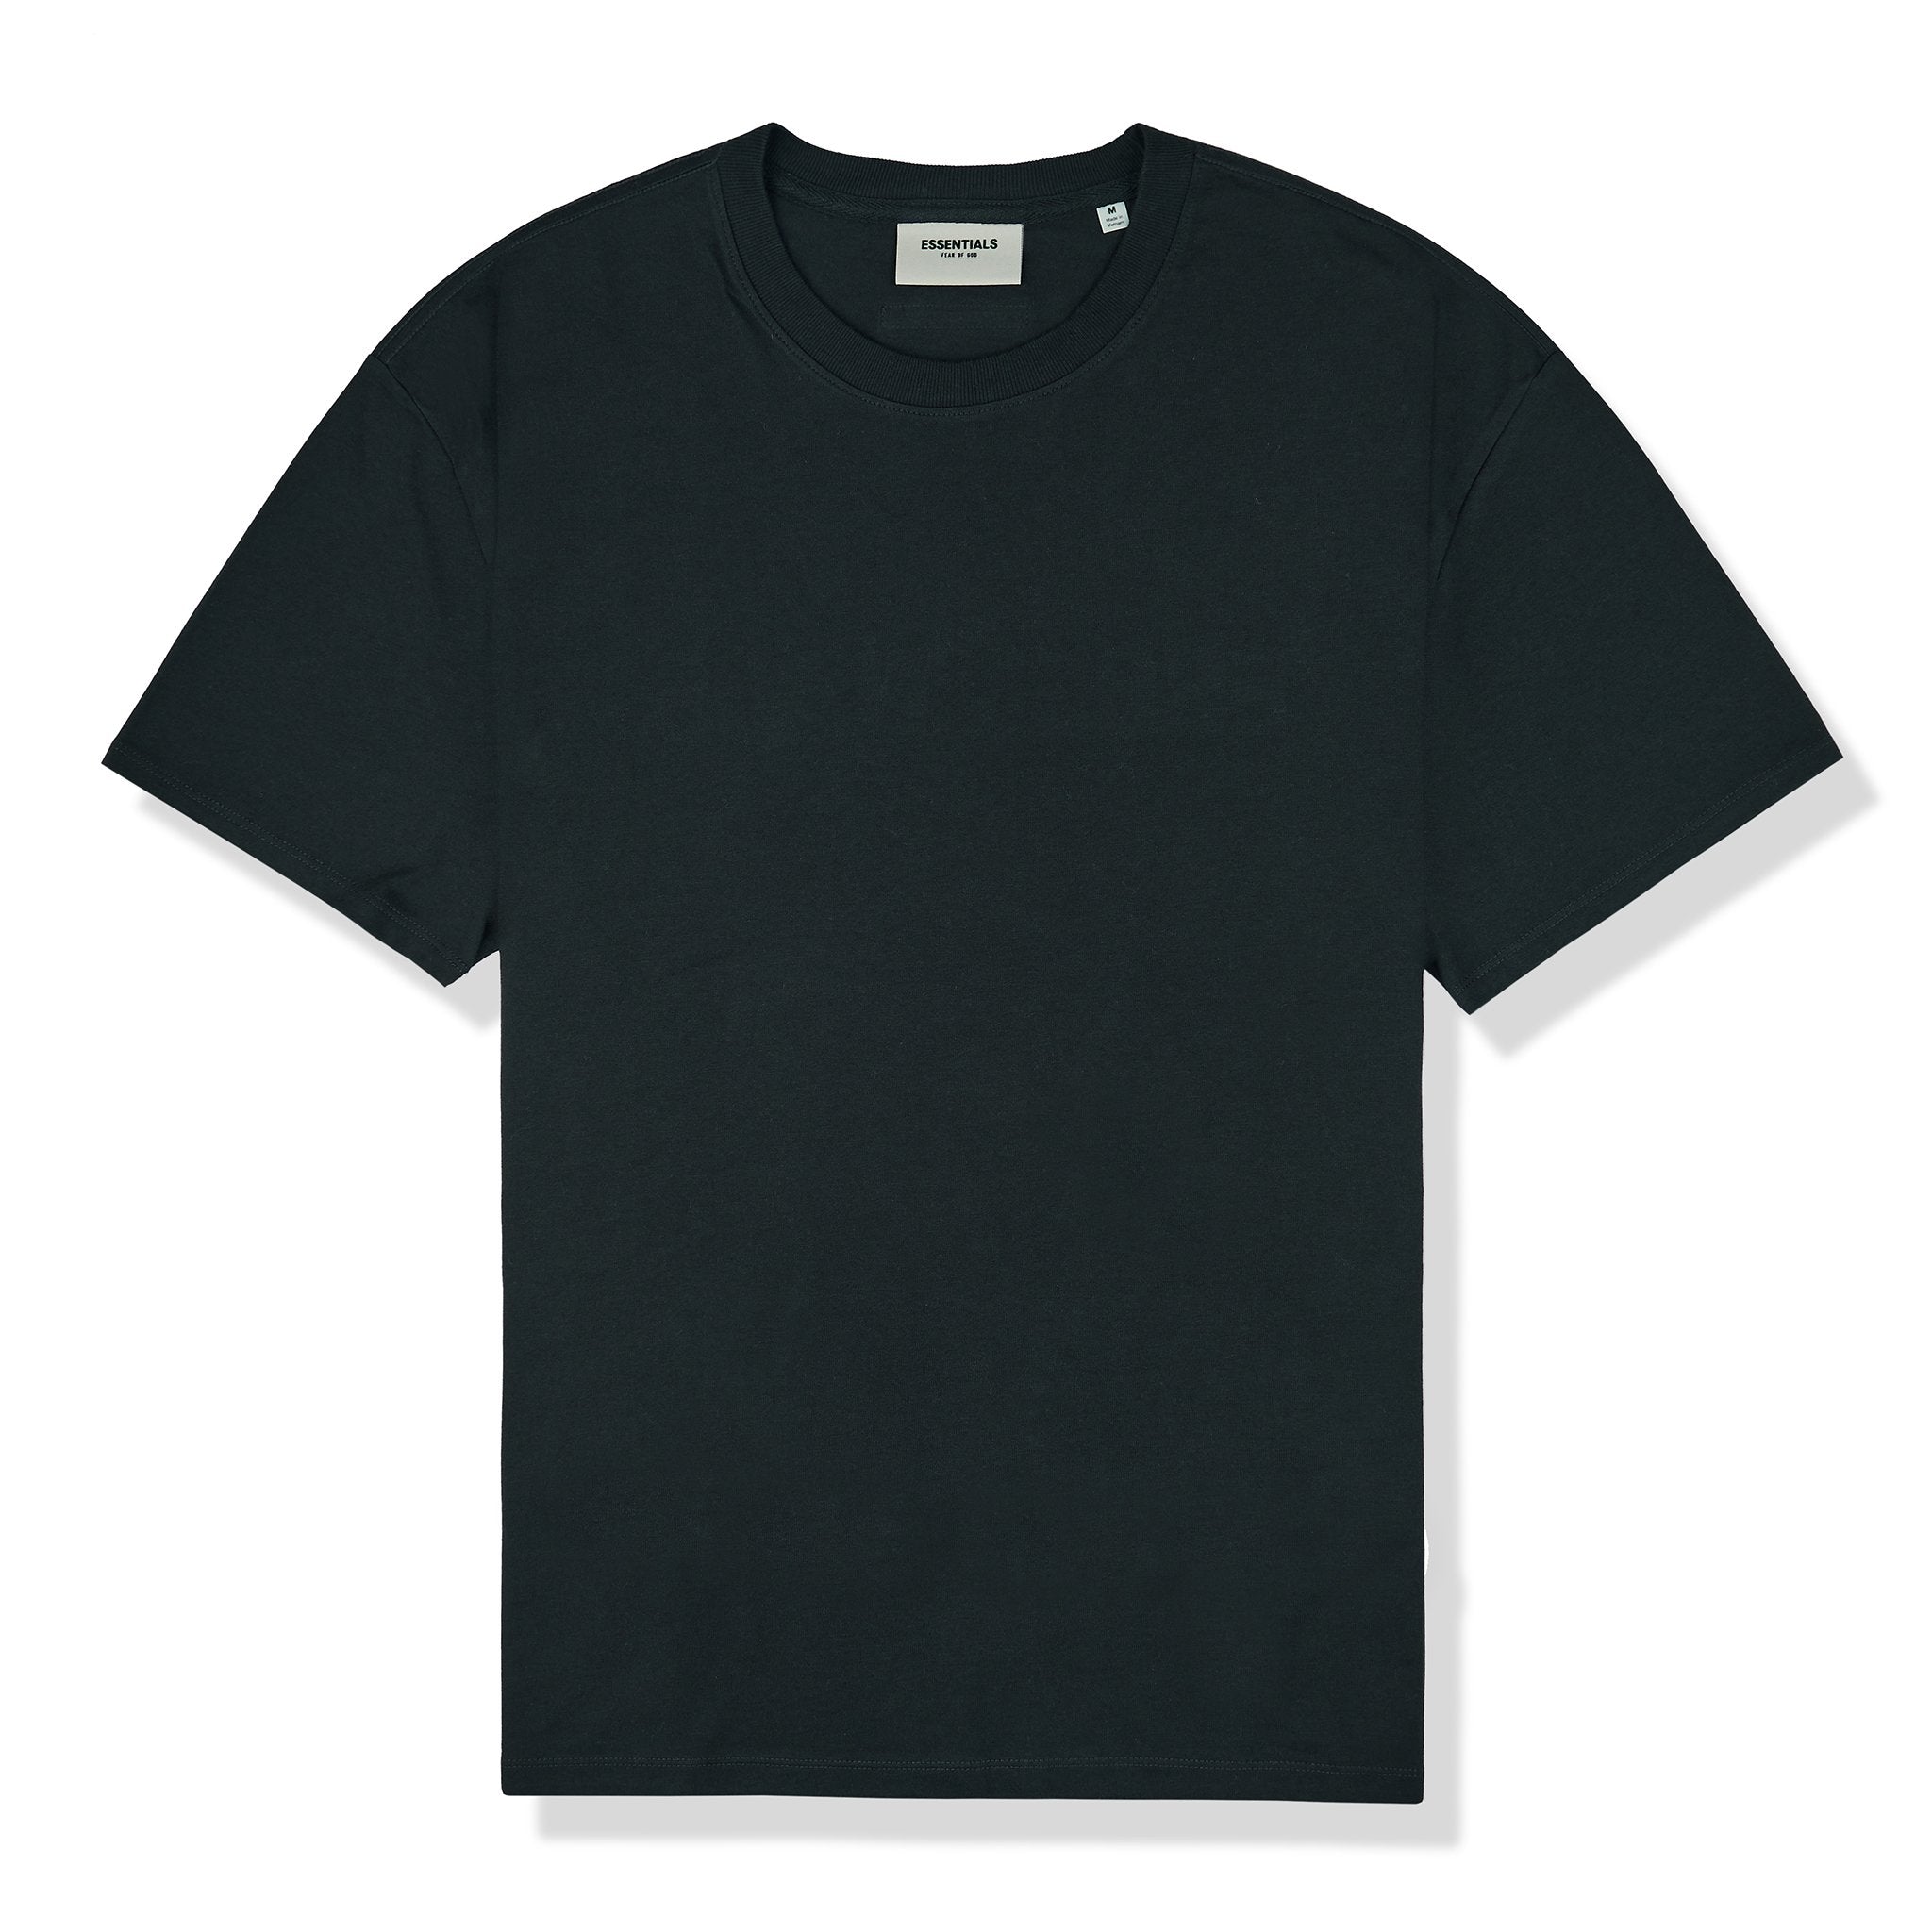 Image of Fear Of God Essentials Back Logo Black T Shirt